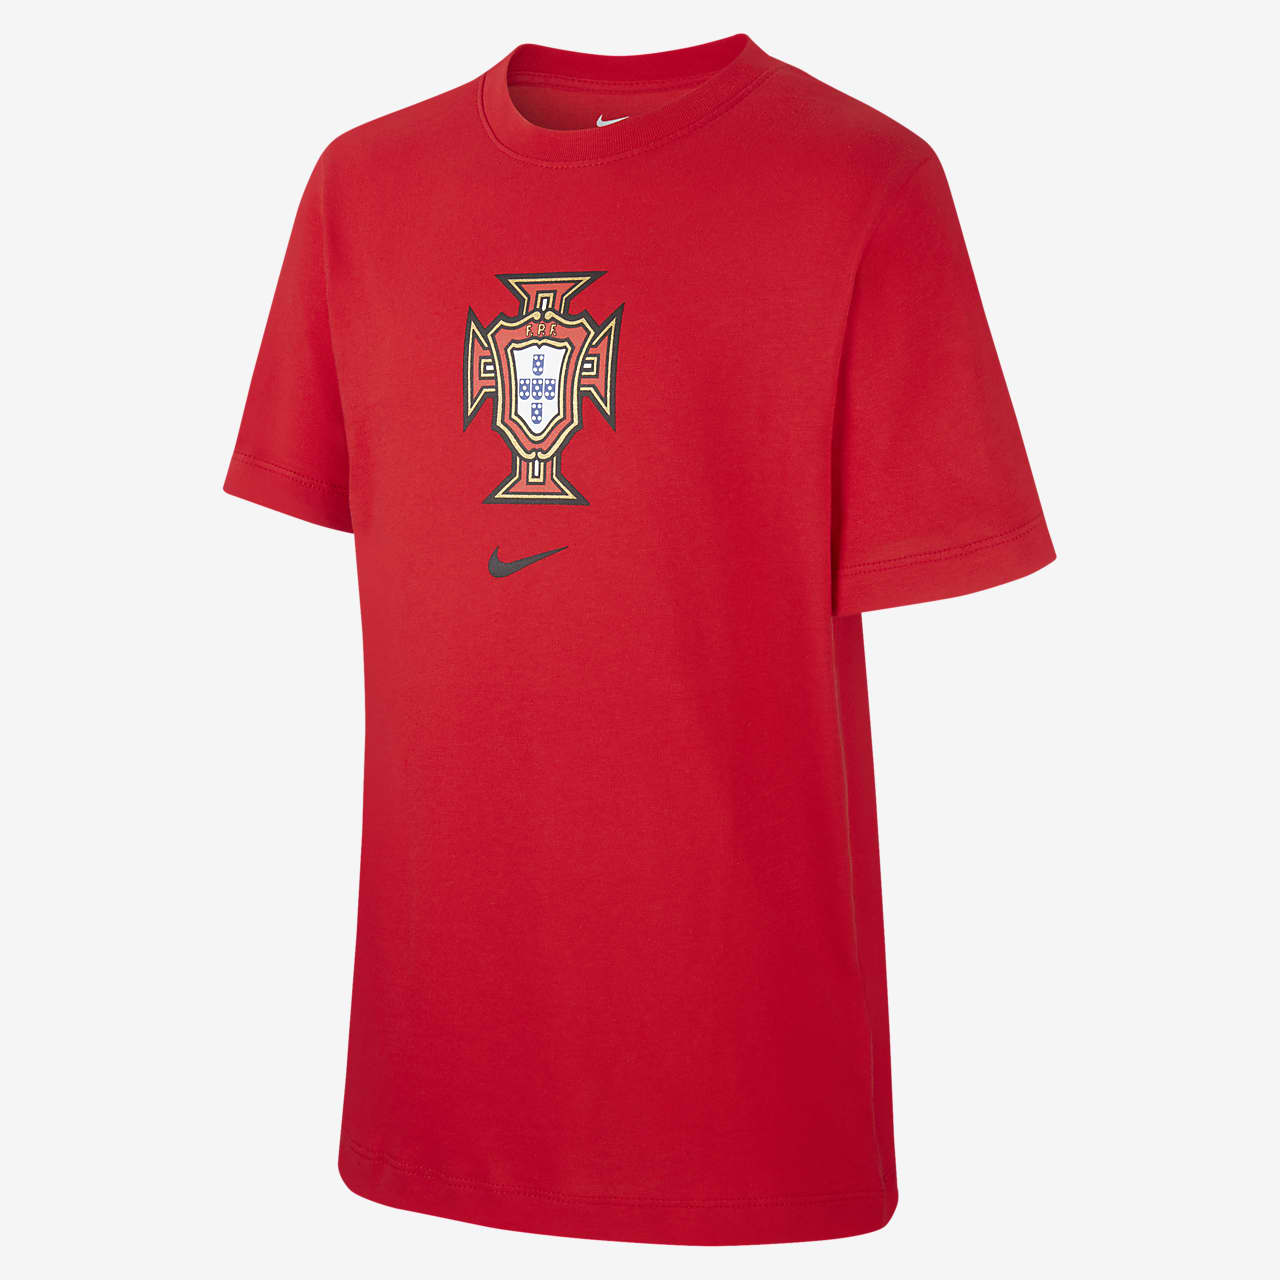 Portugal Camiseta de fútbol - Niño/a